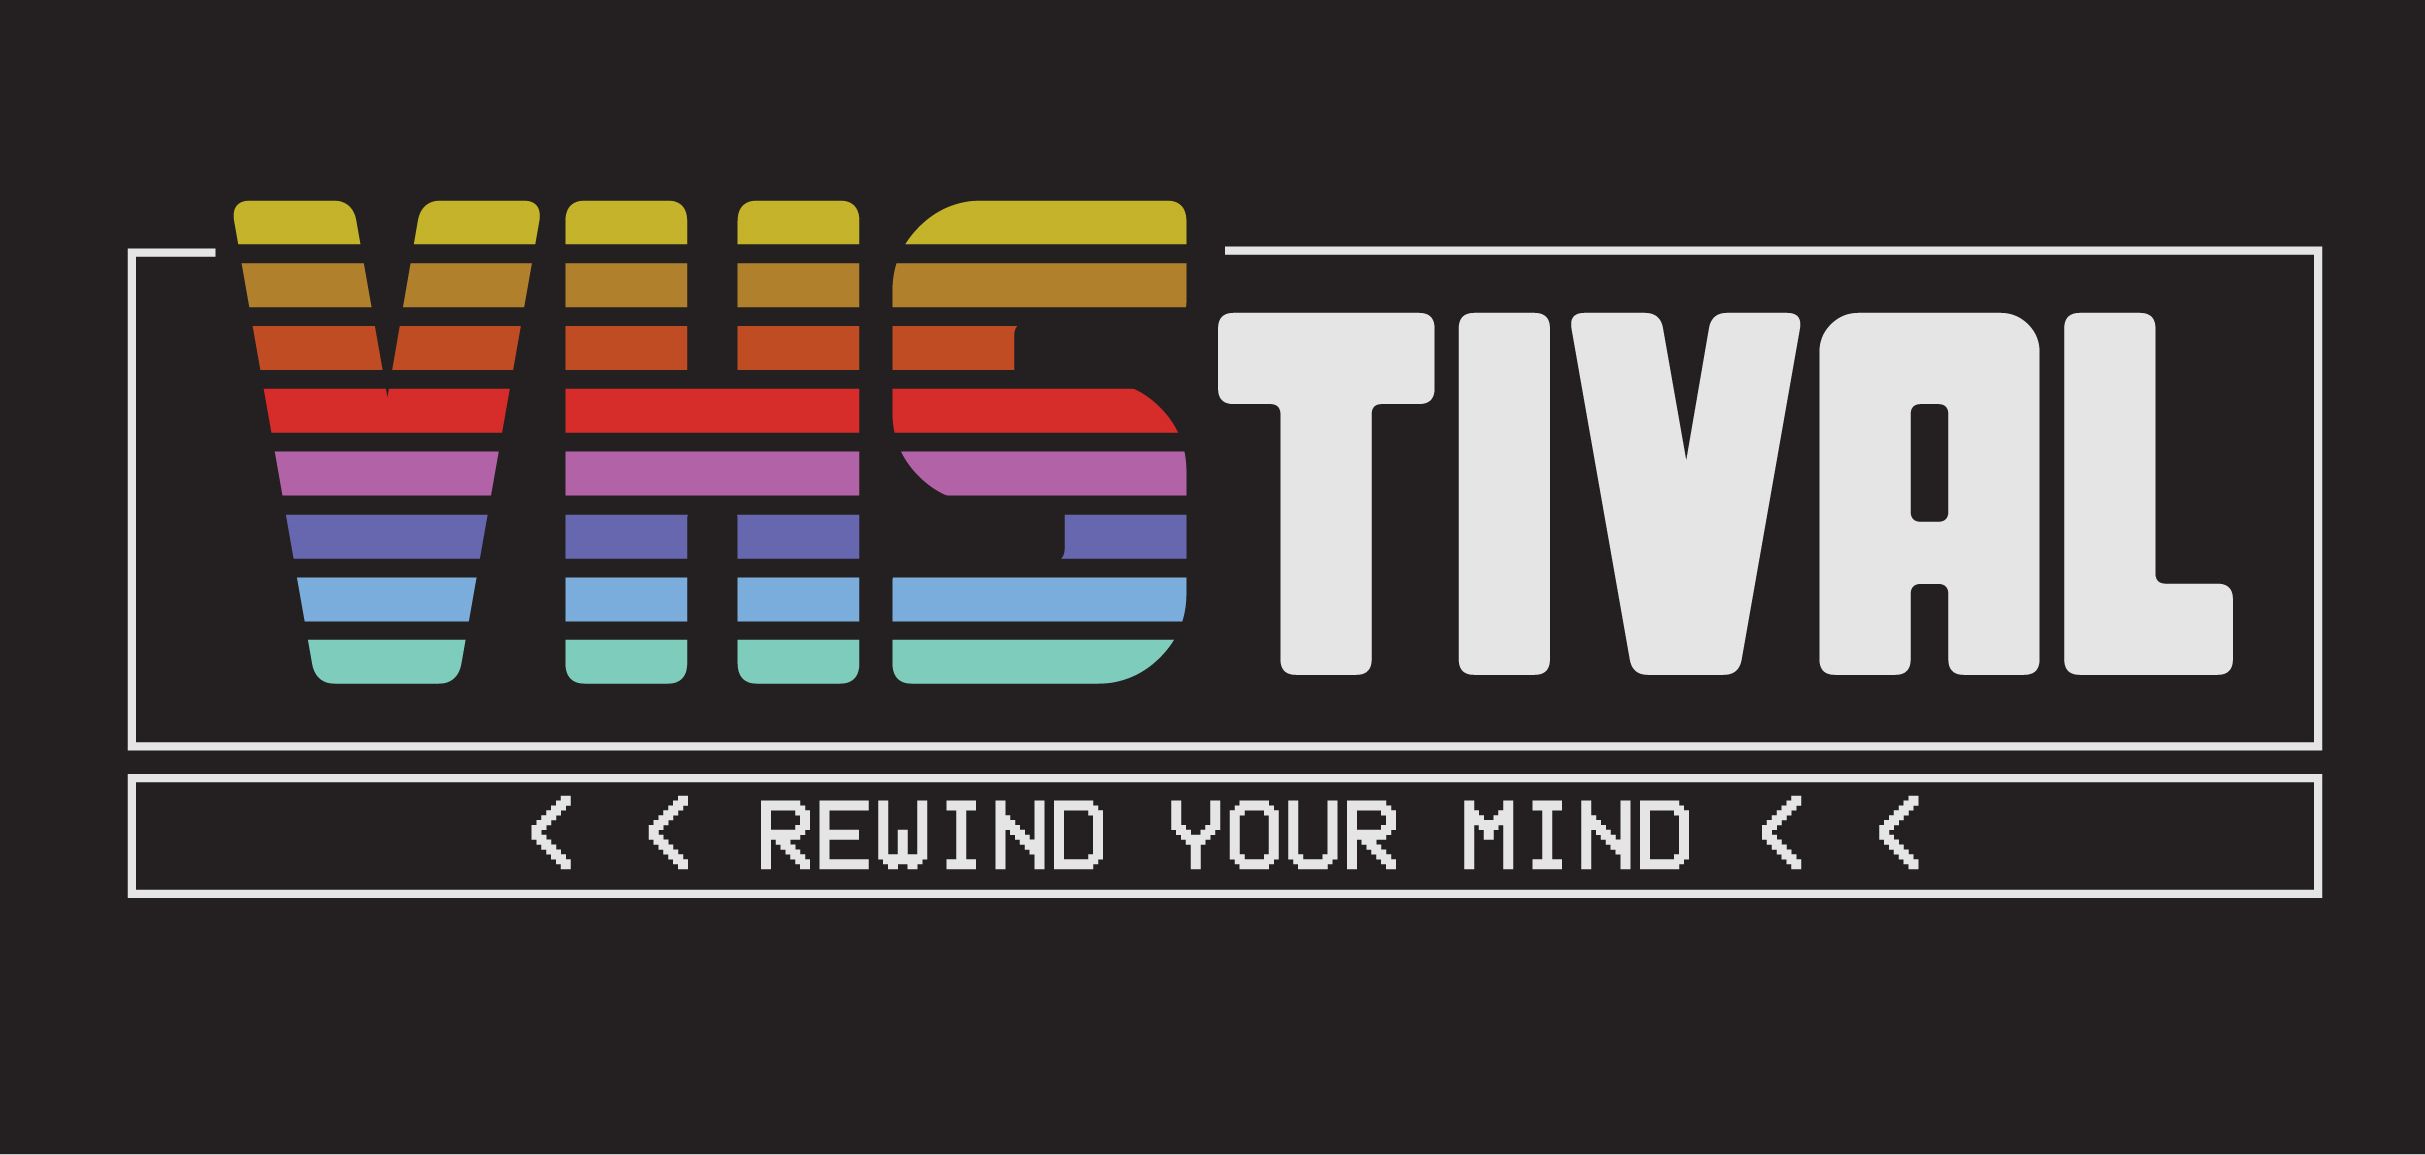 VHStival logo #1